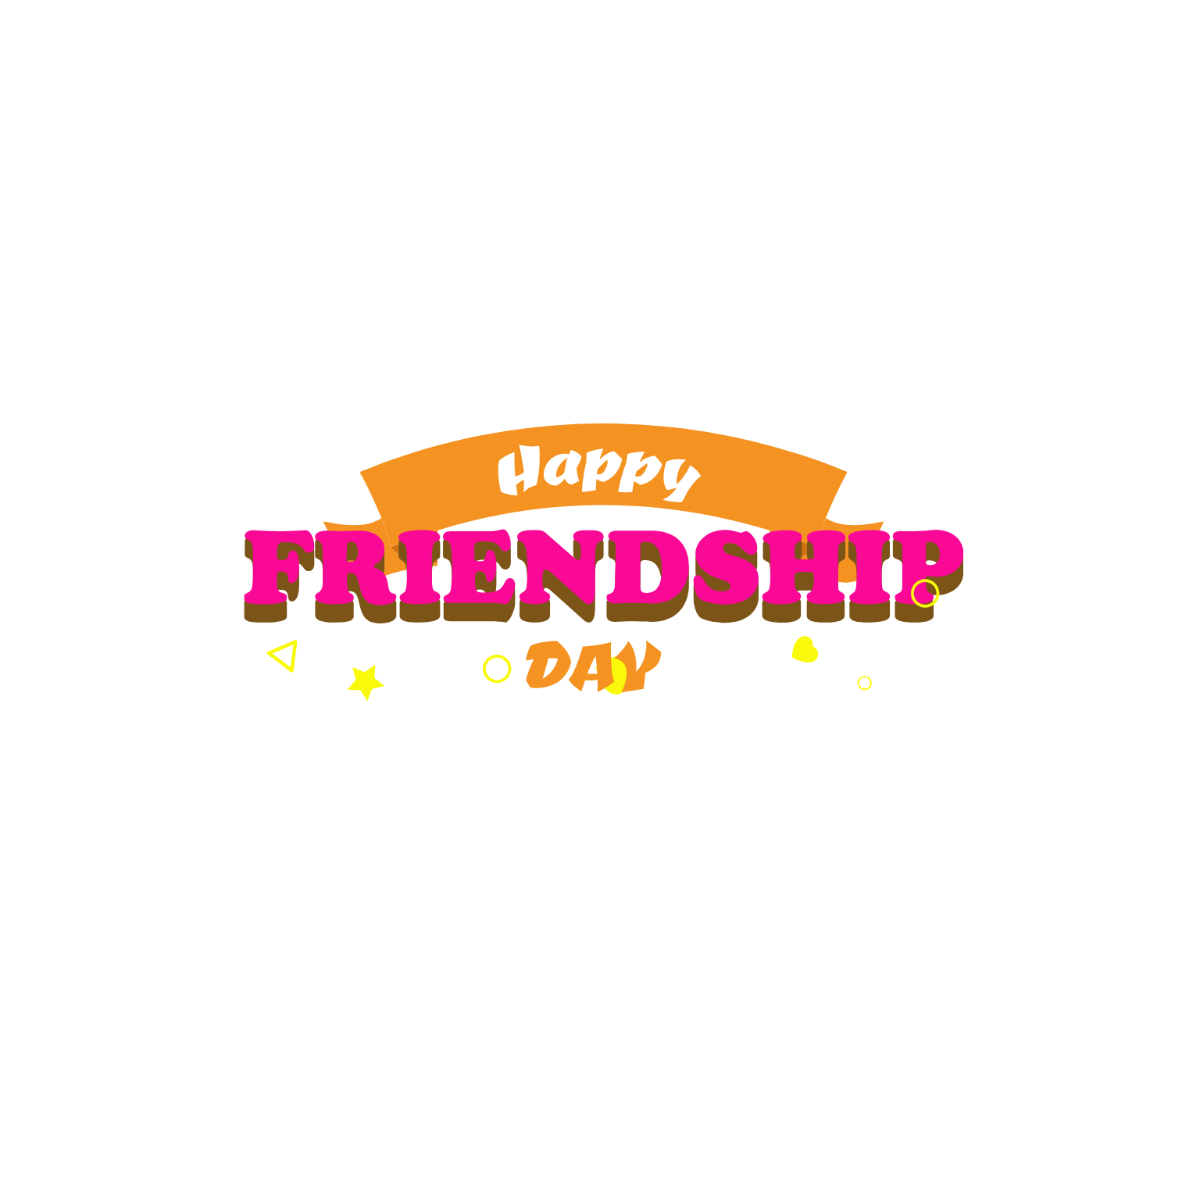 Friendship Day Text